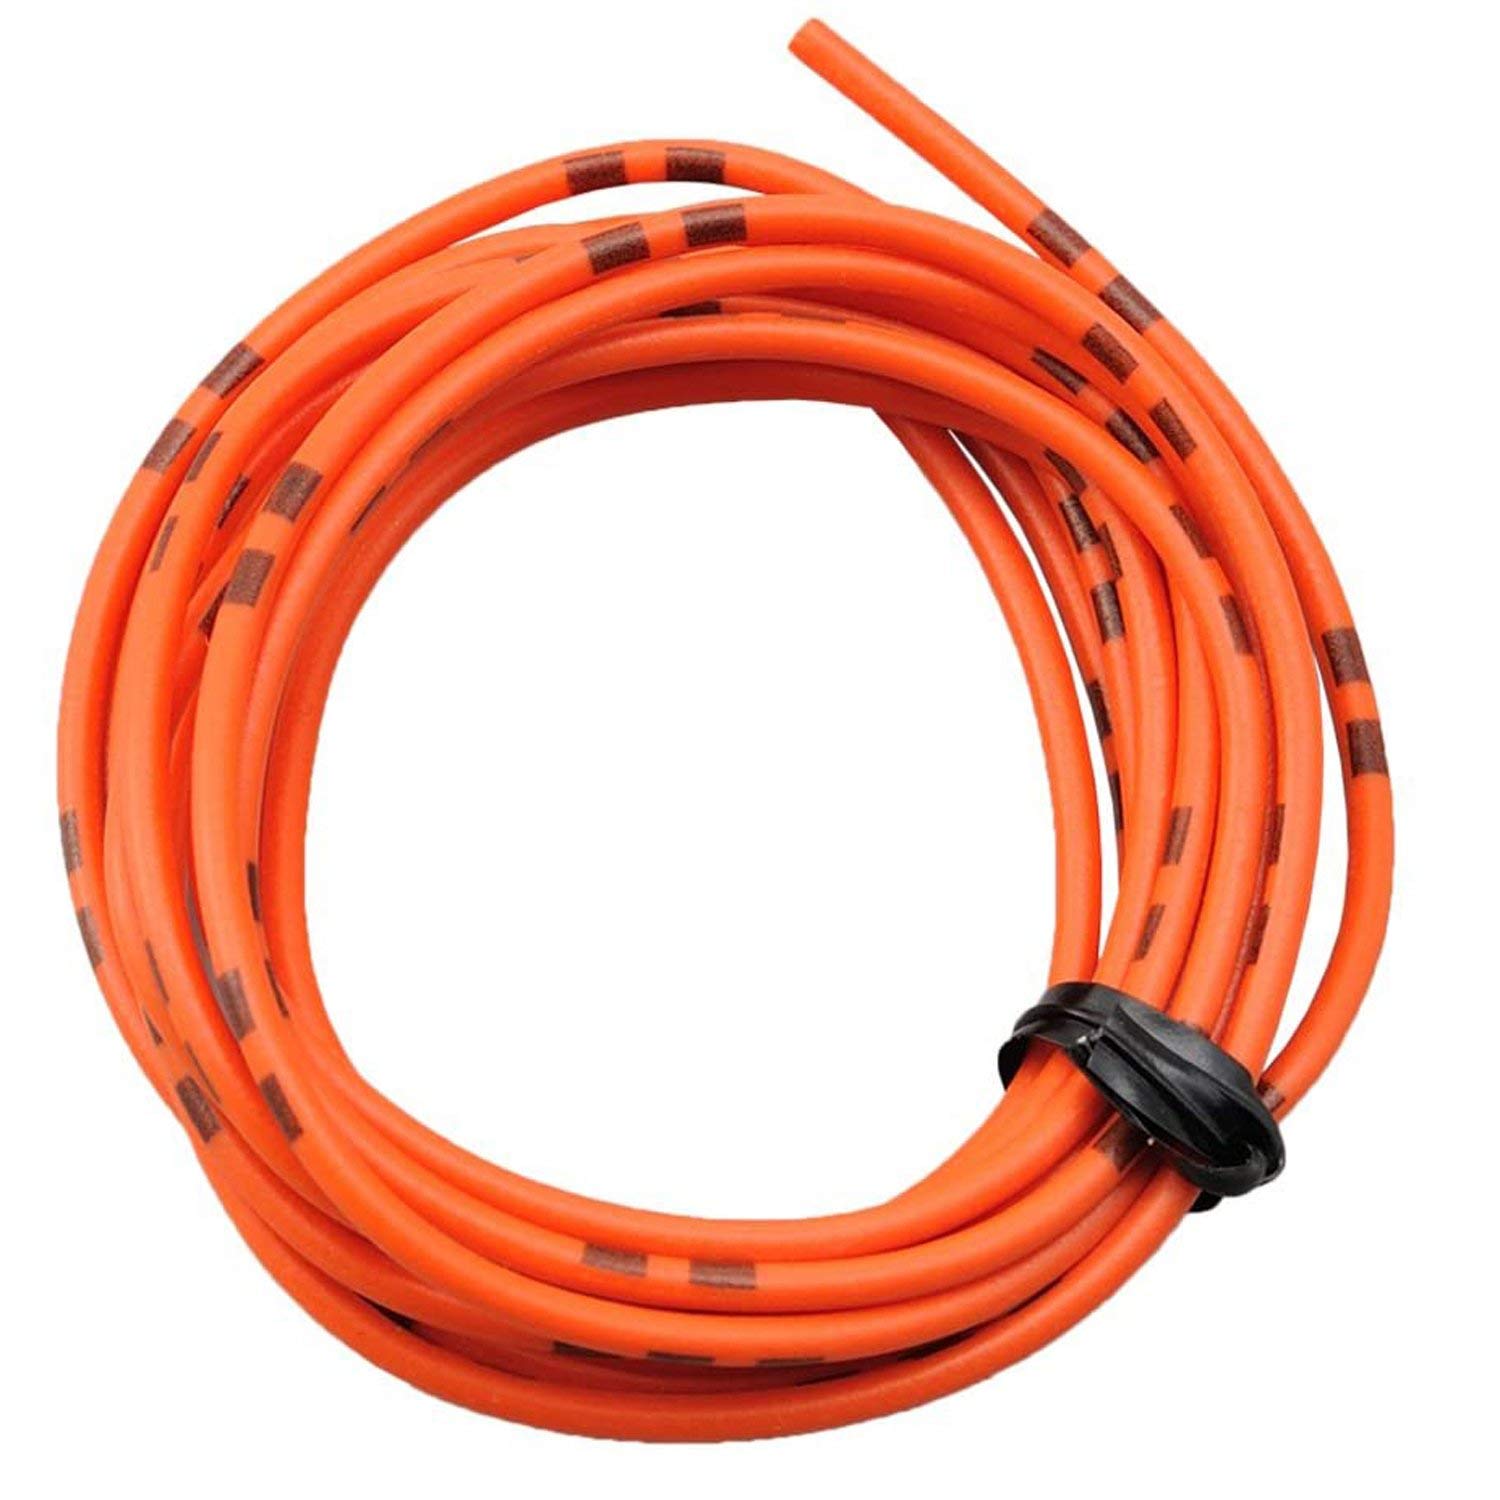 DAYTONA farbiges Kabel AWG18 0.75qmm, 2 Meter, orange von Daytona